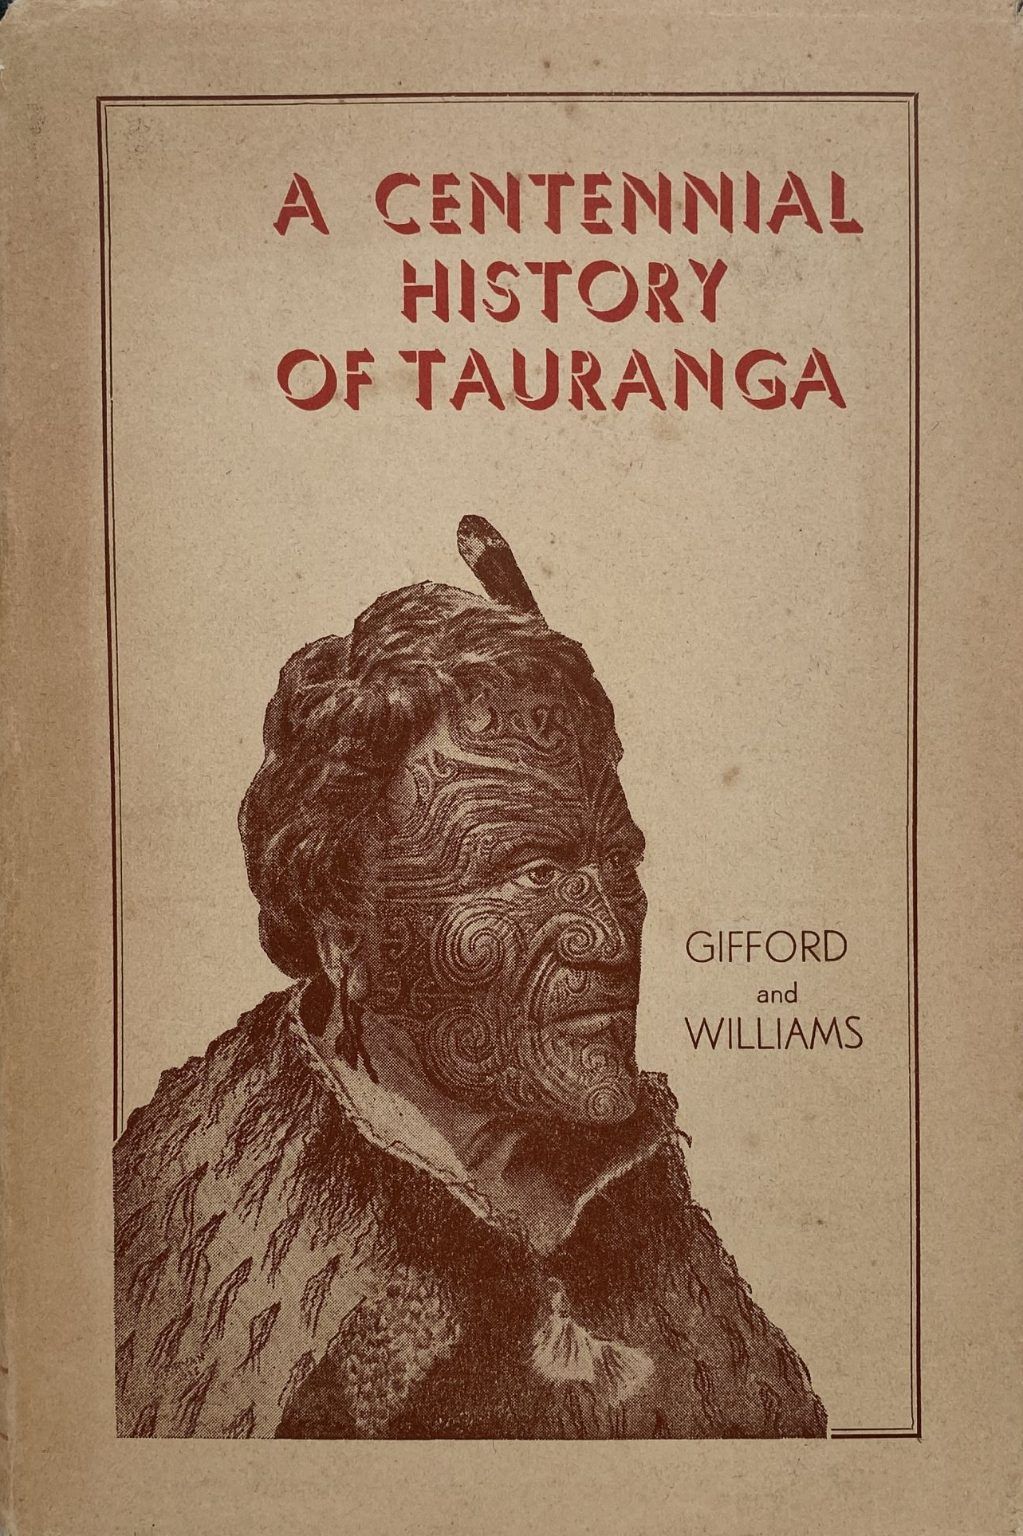 A CENTENNIAL HISTORY OF TAURANGA